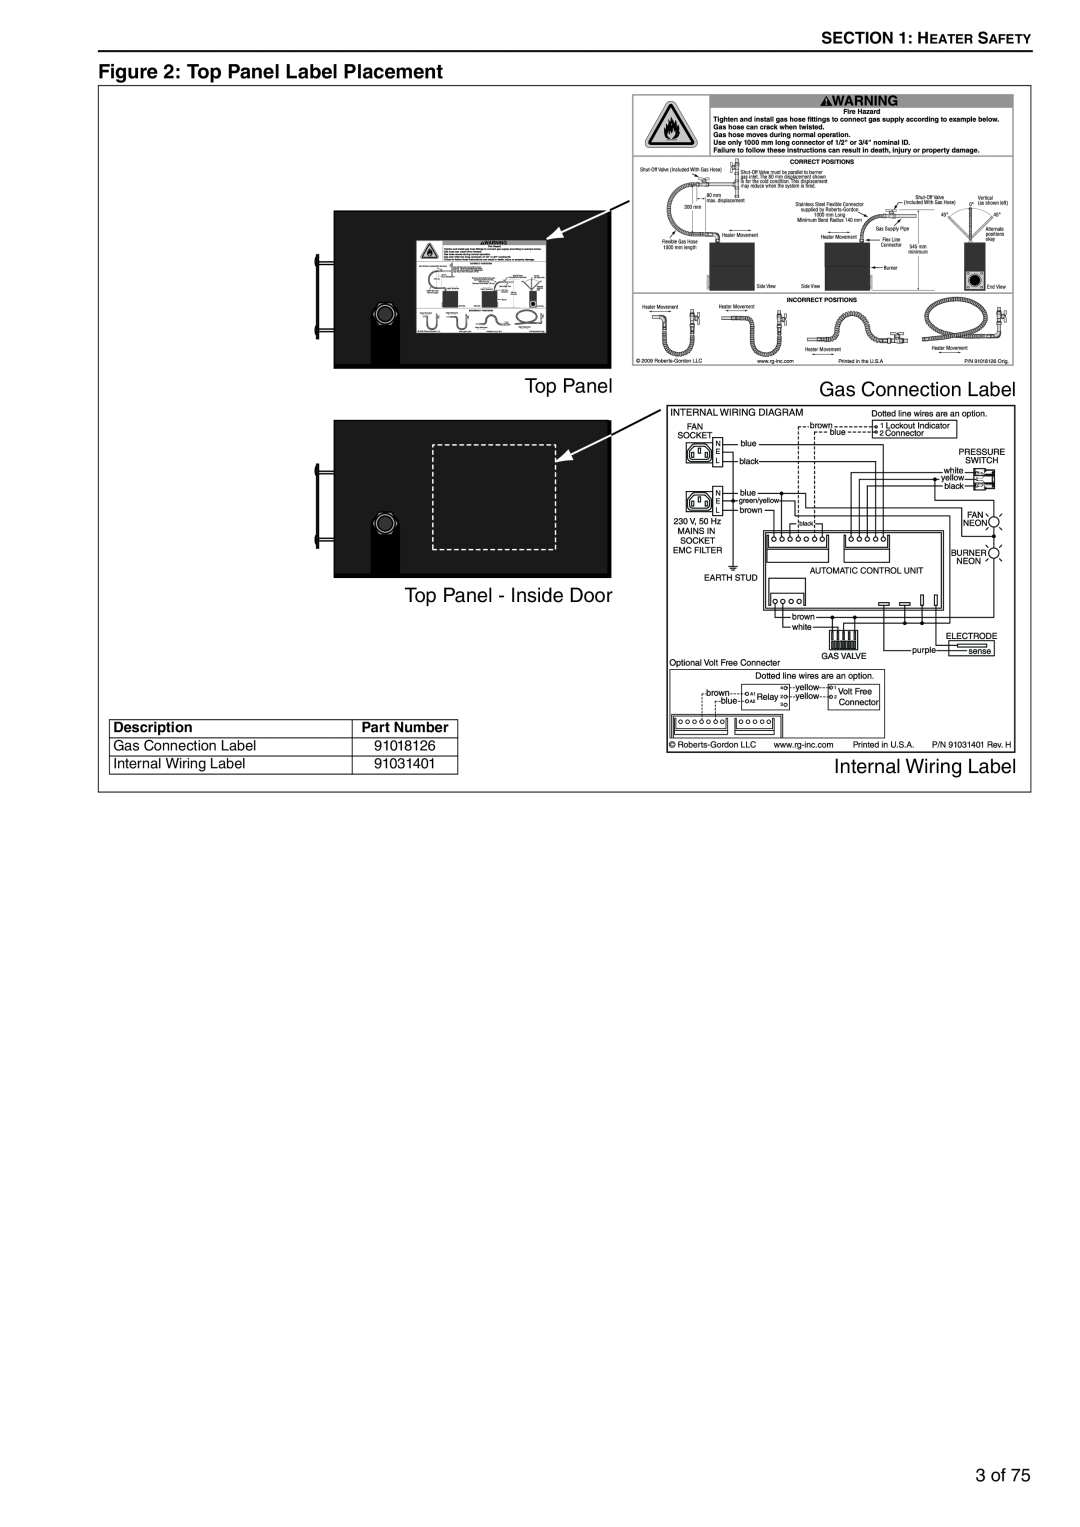 Roberts Gorden BH30ST/EF Top Panel Label Placement, Gas Connection Label, Top Panel - Inside Door, Internal Wiring Label 